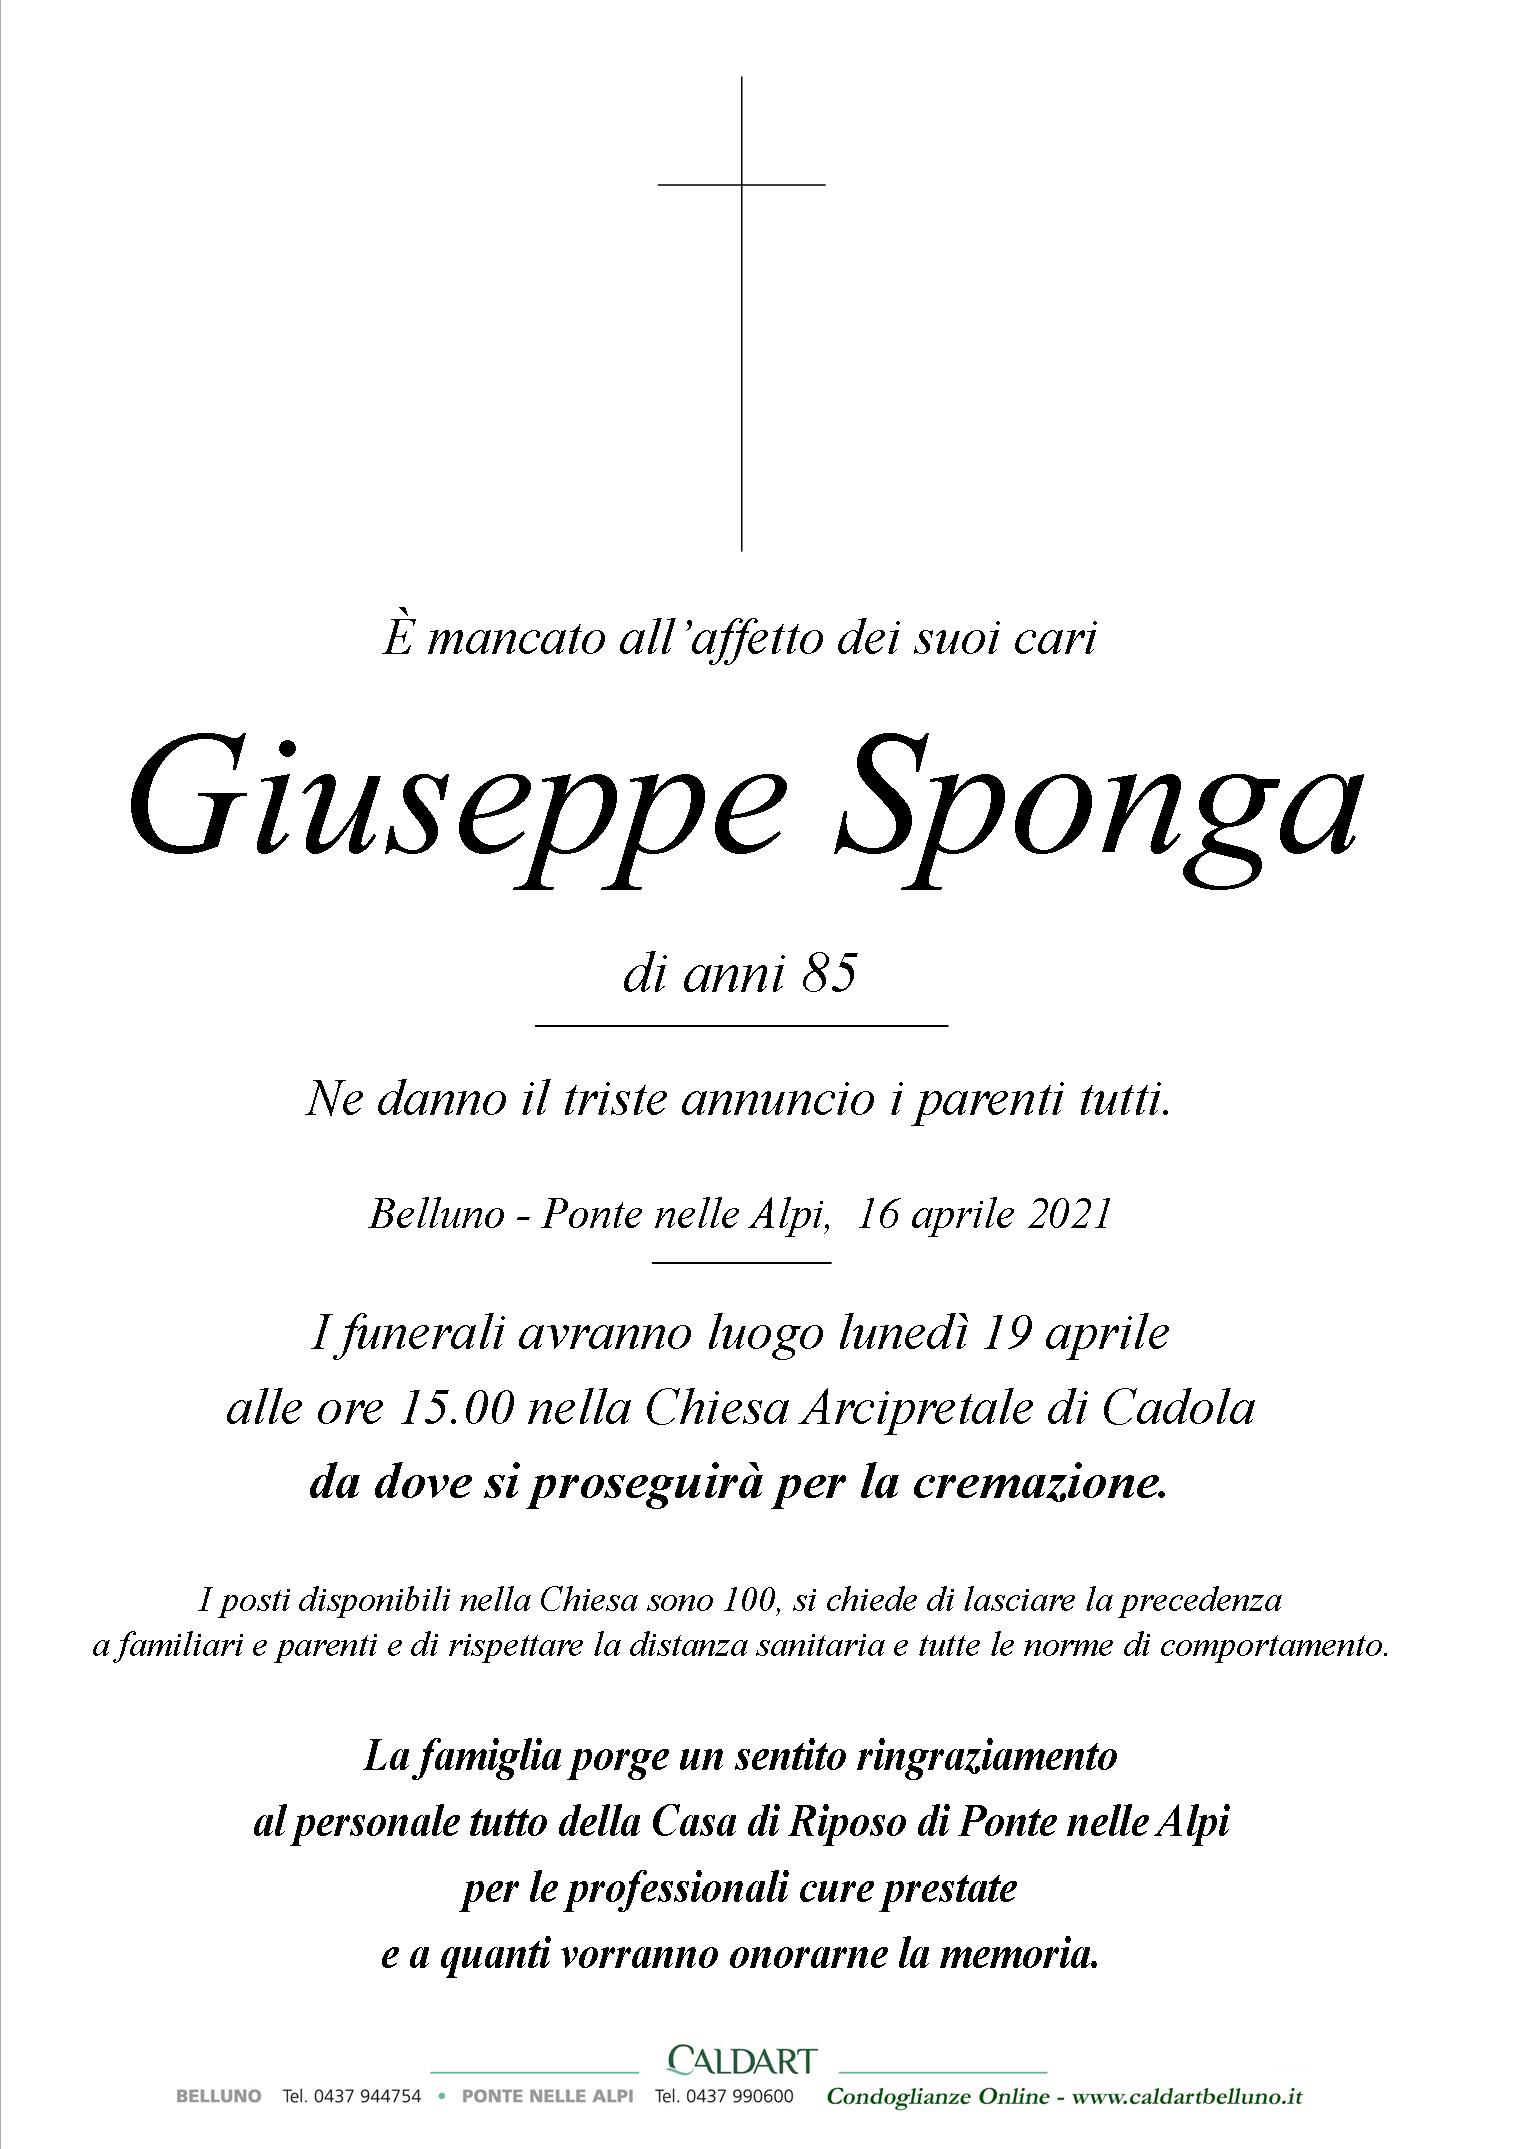 Sponga Giuseppe